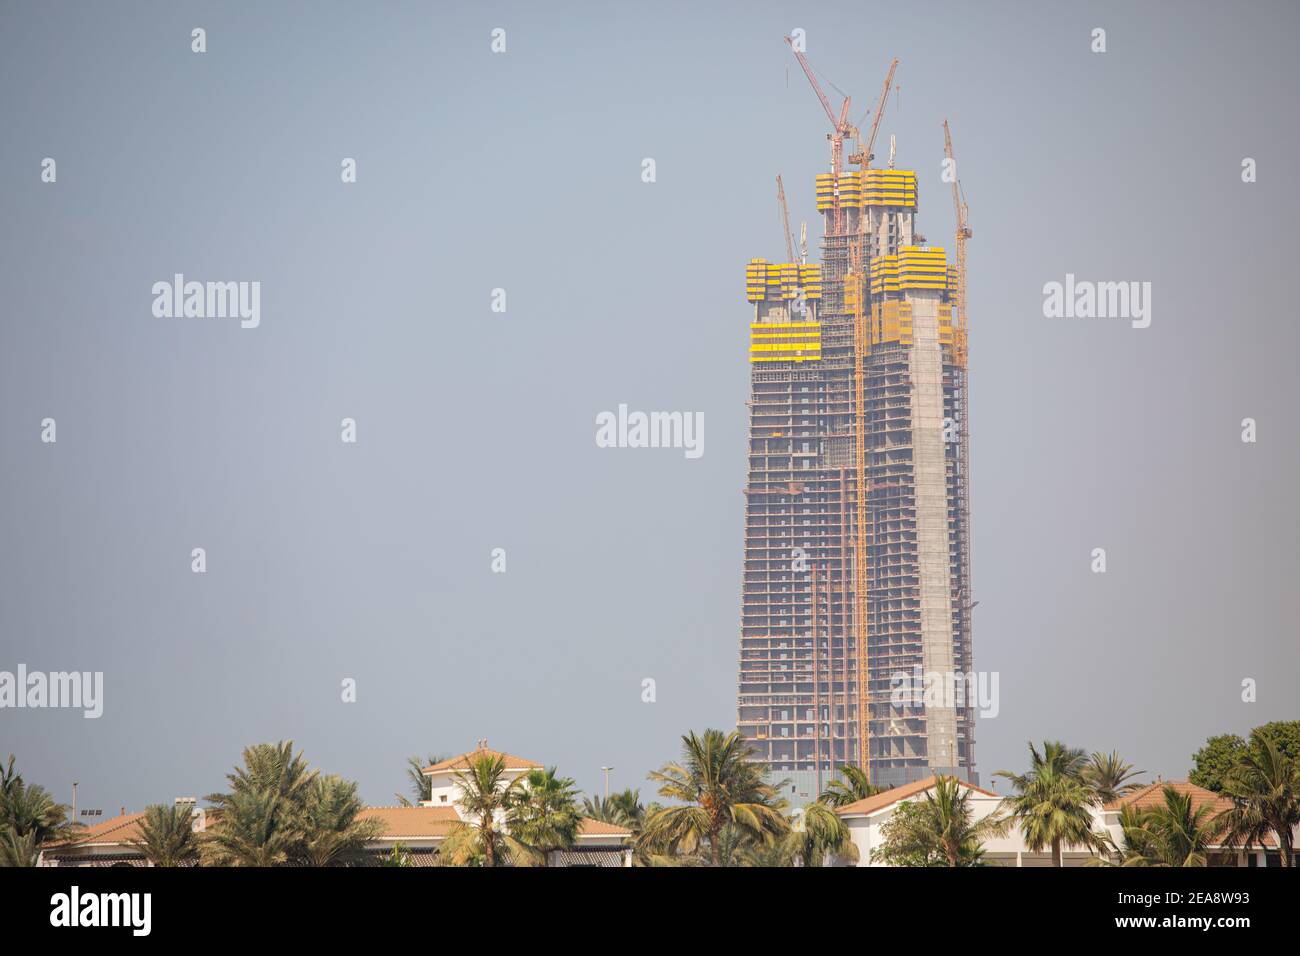 Kingdom Tower under construction, Jeddah, Saudi arabia, 2019 Stock Photo